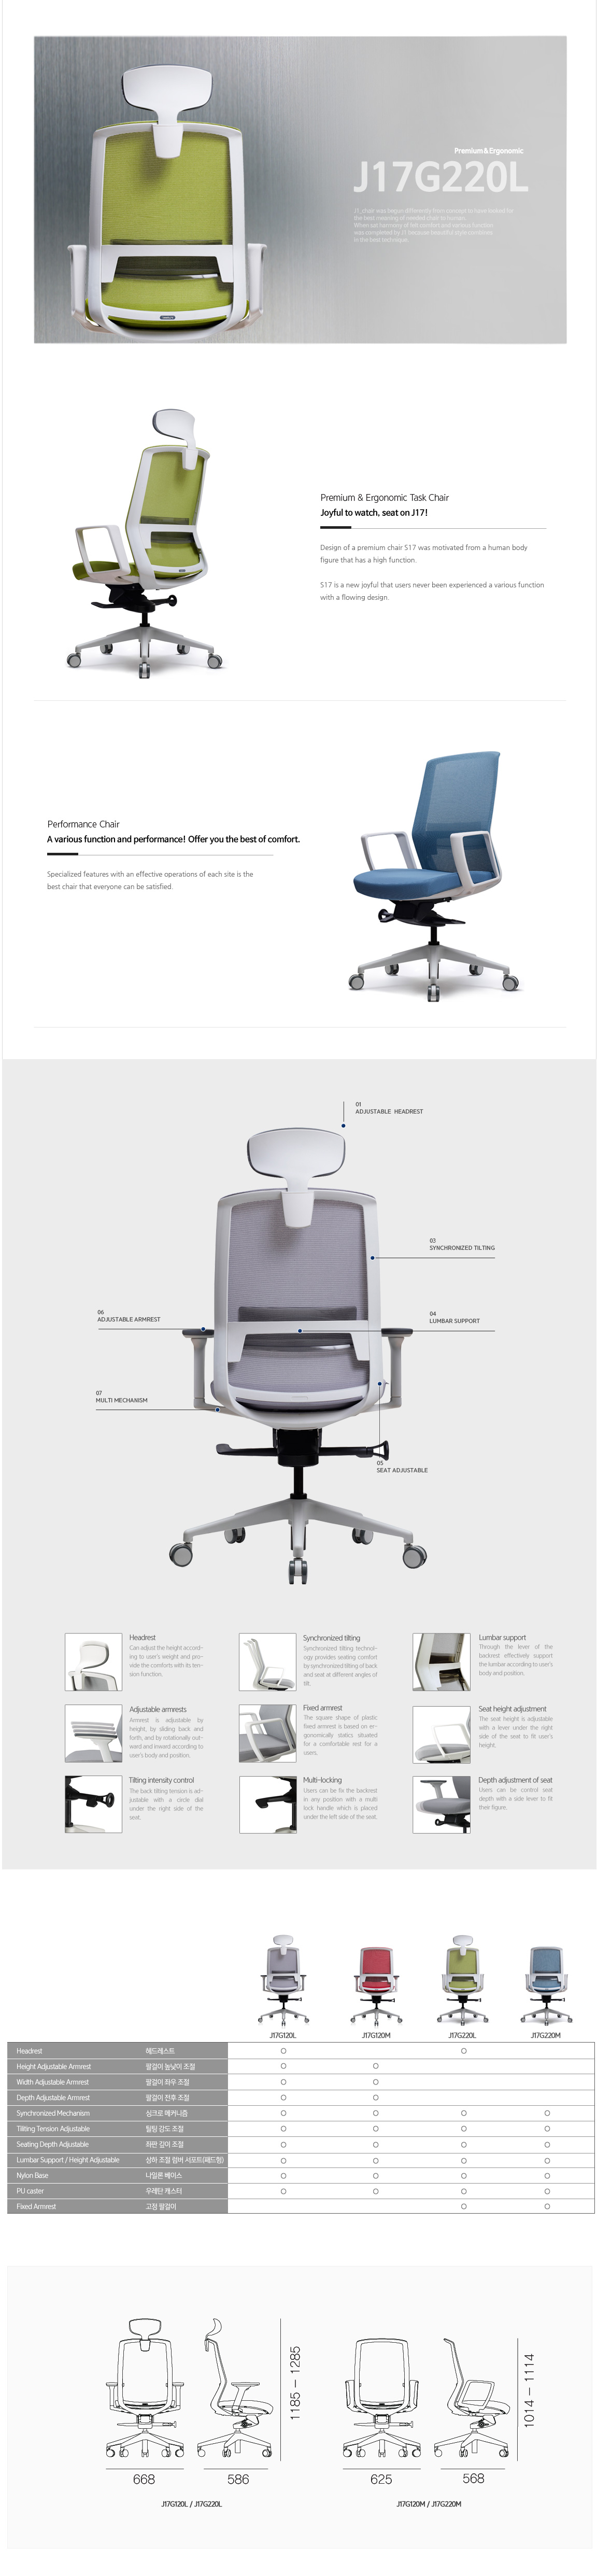 Luxdezine Office Chairs Furniture J17G220L